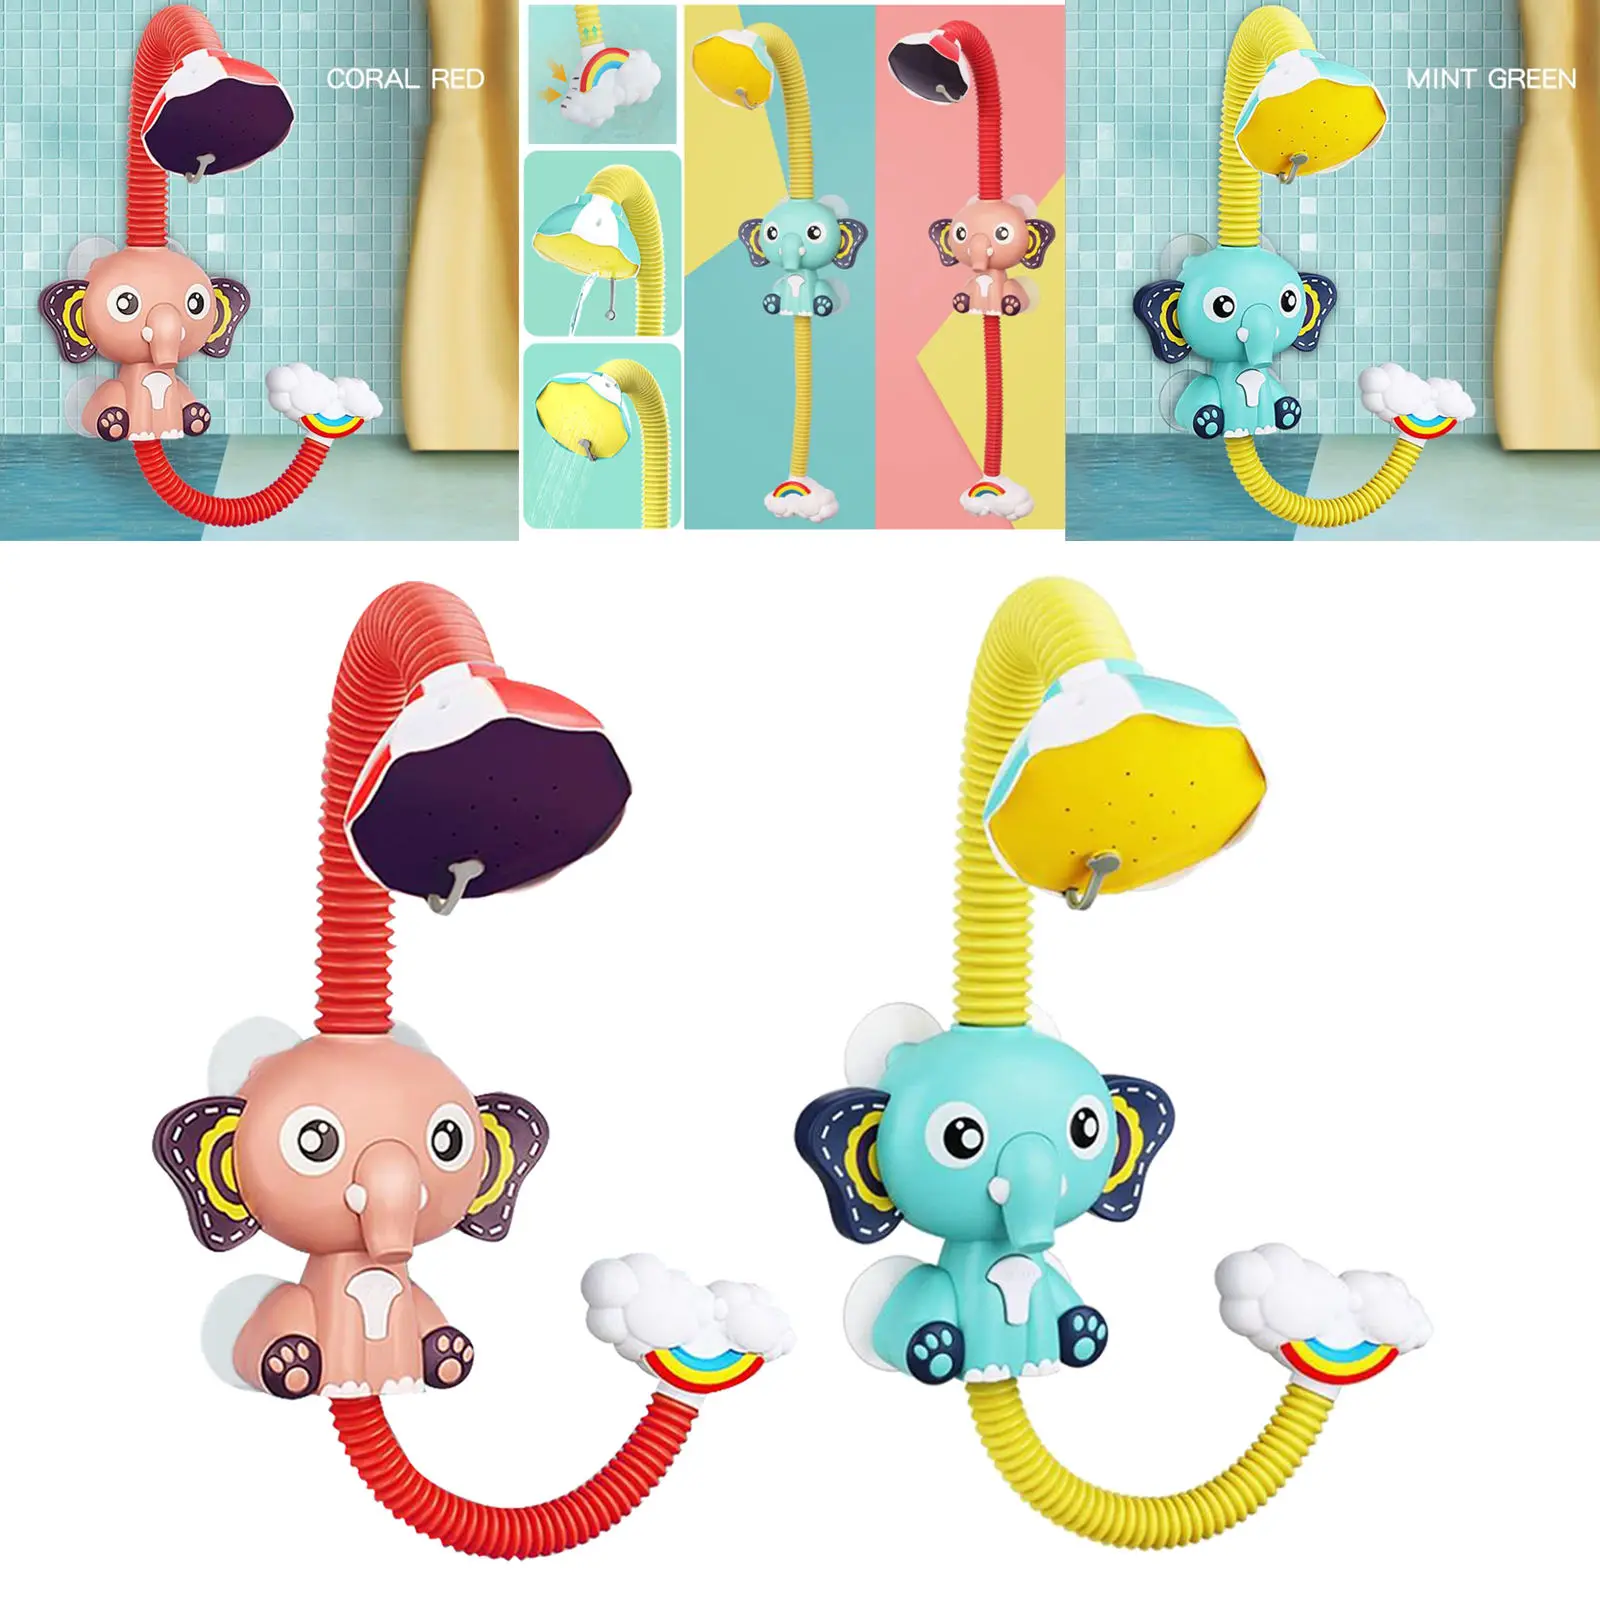 Electric Elephant Water Spray Bath Toys For Kids Baby Bathroom Bathtub Spray Shower Toys Strong Suction Cup On Bathtub Play Toy